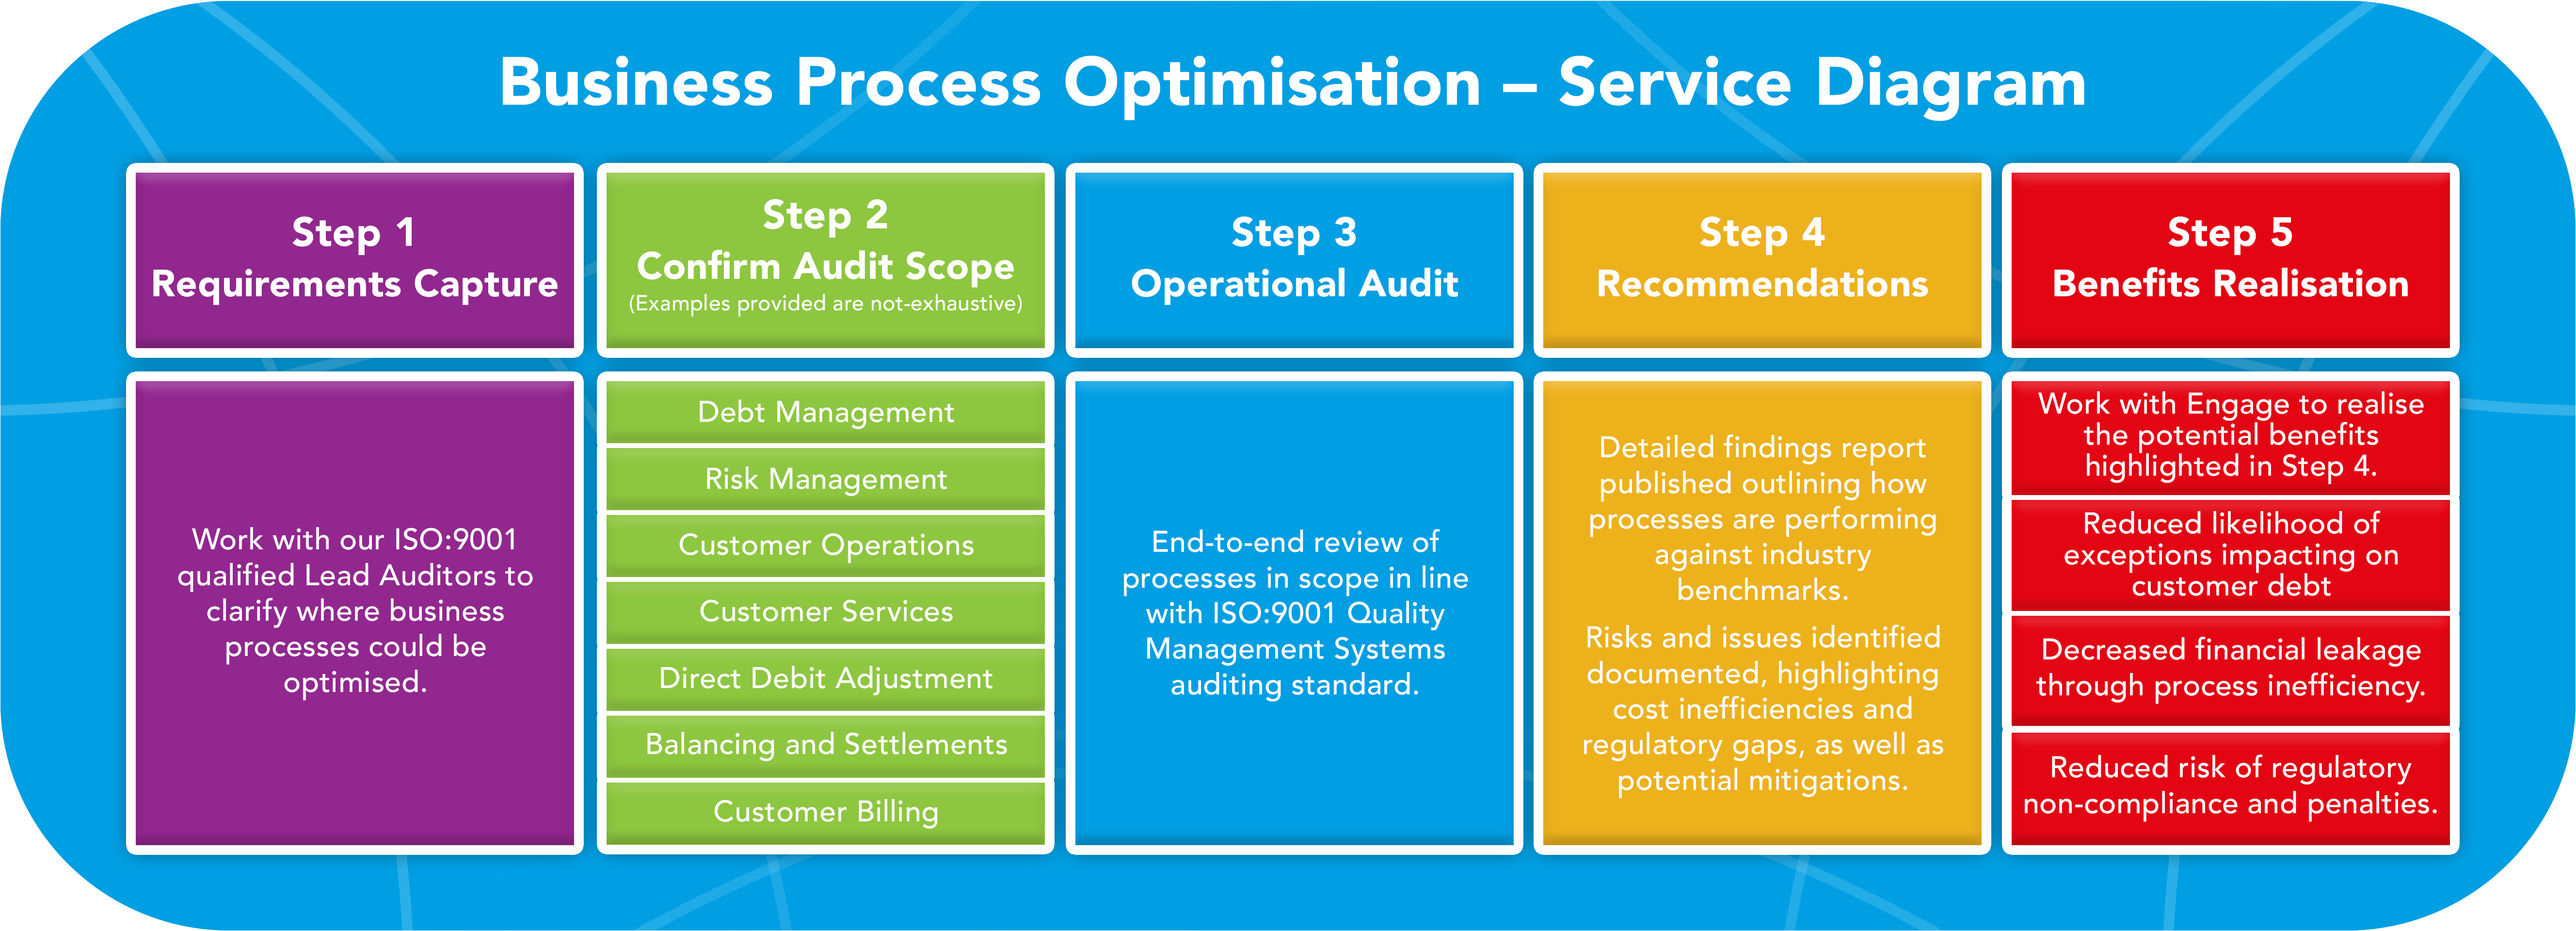 Business Process Optimisation - Service Diagram